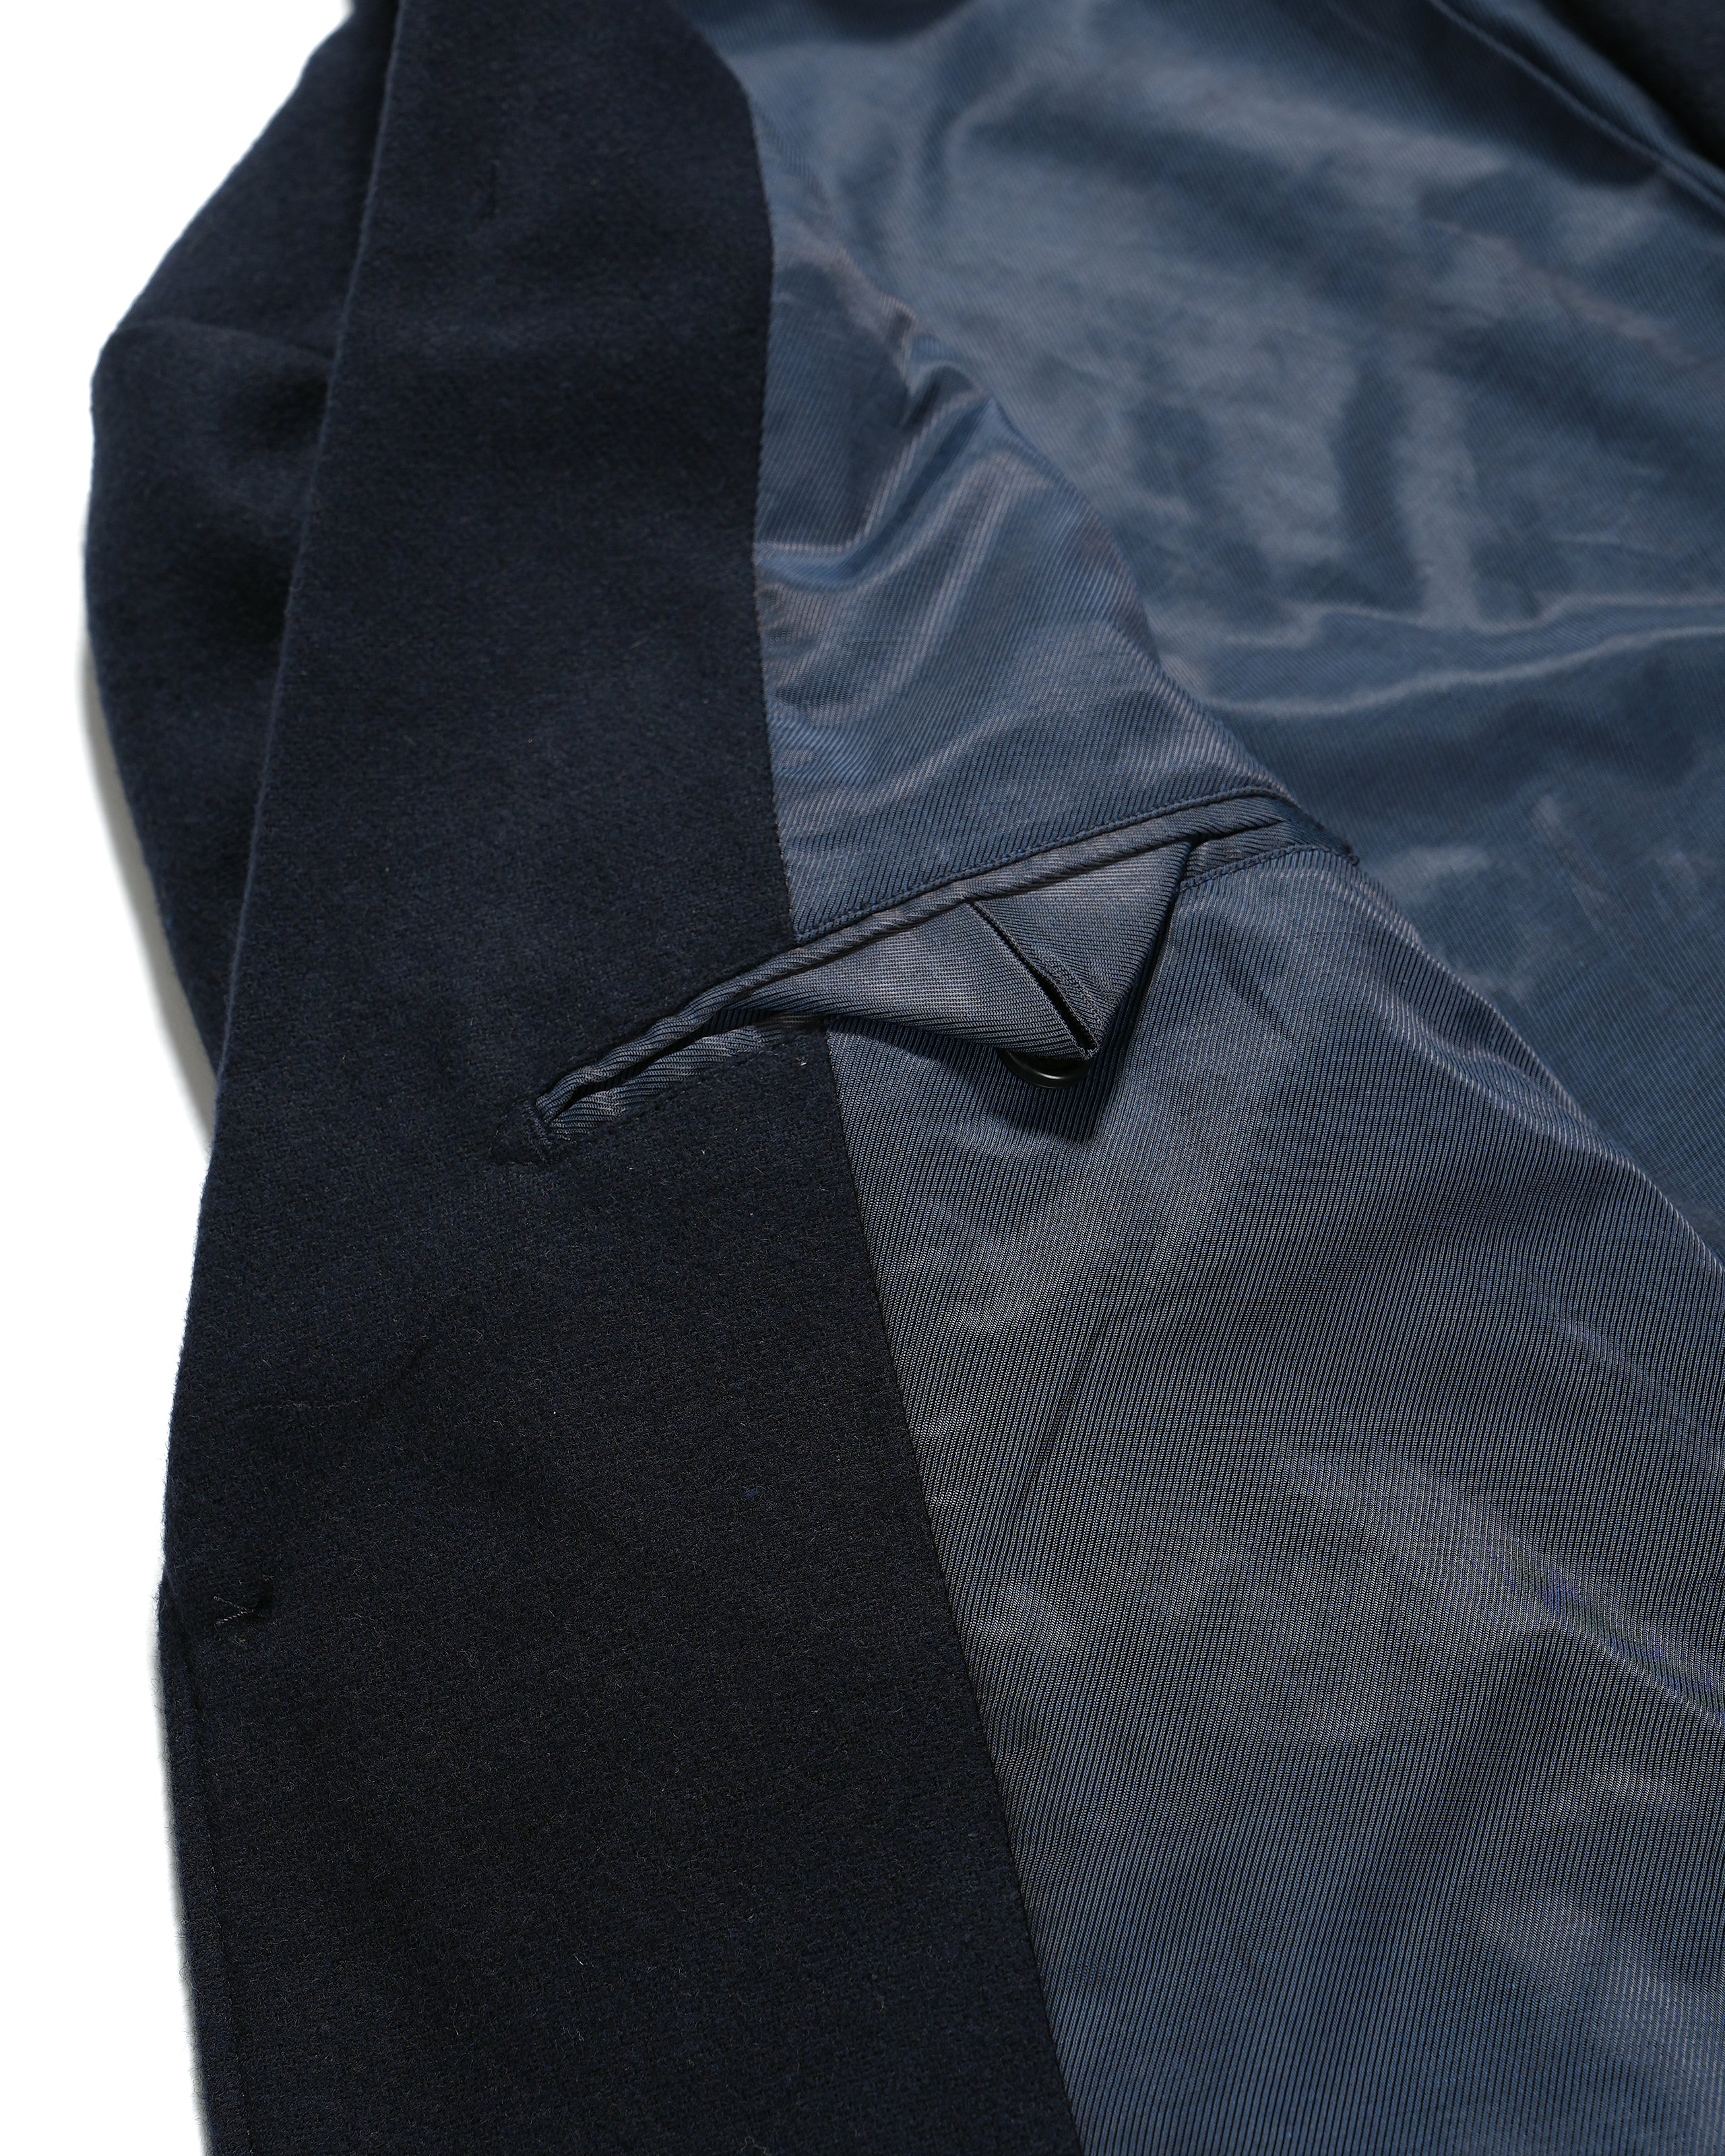 Andover Jacket - Dark Navy Wool Uniform Serge